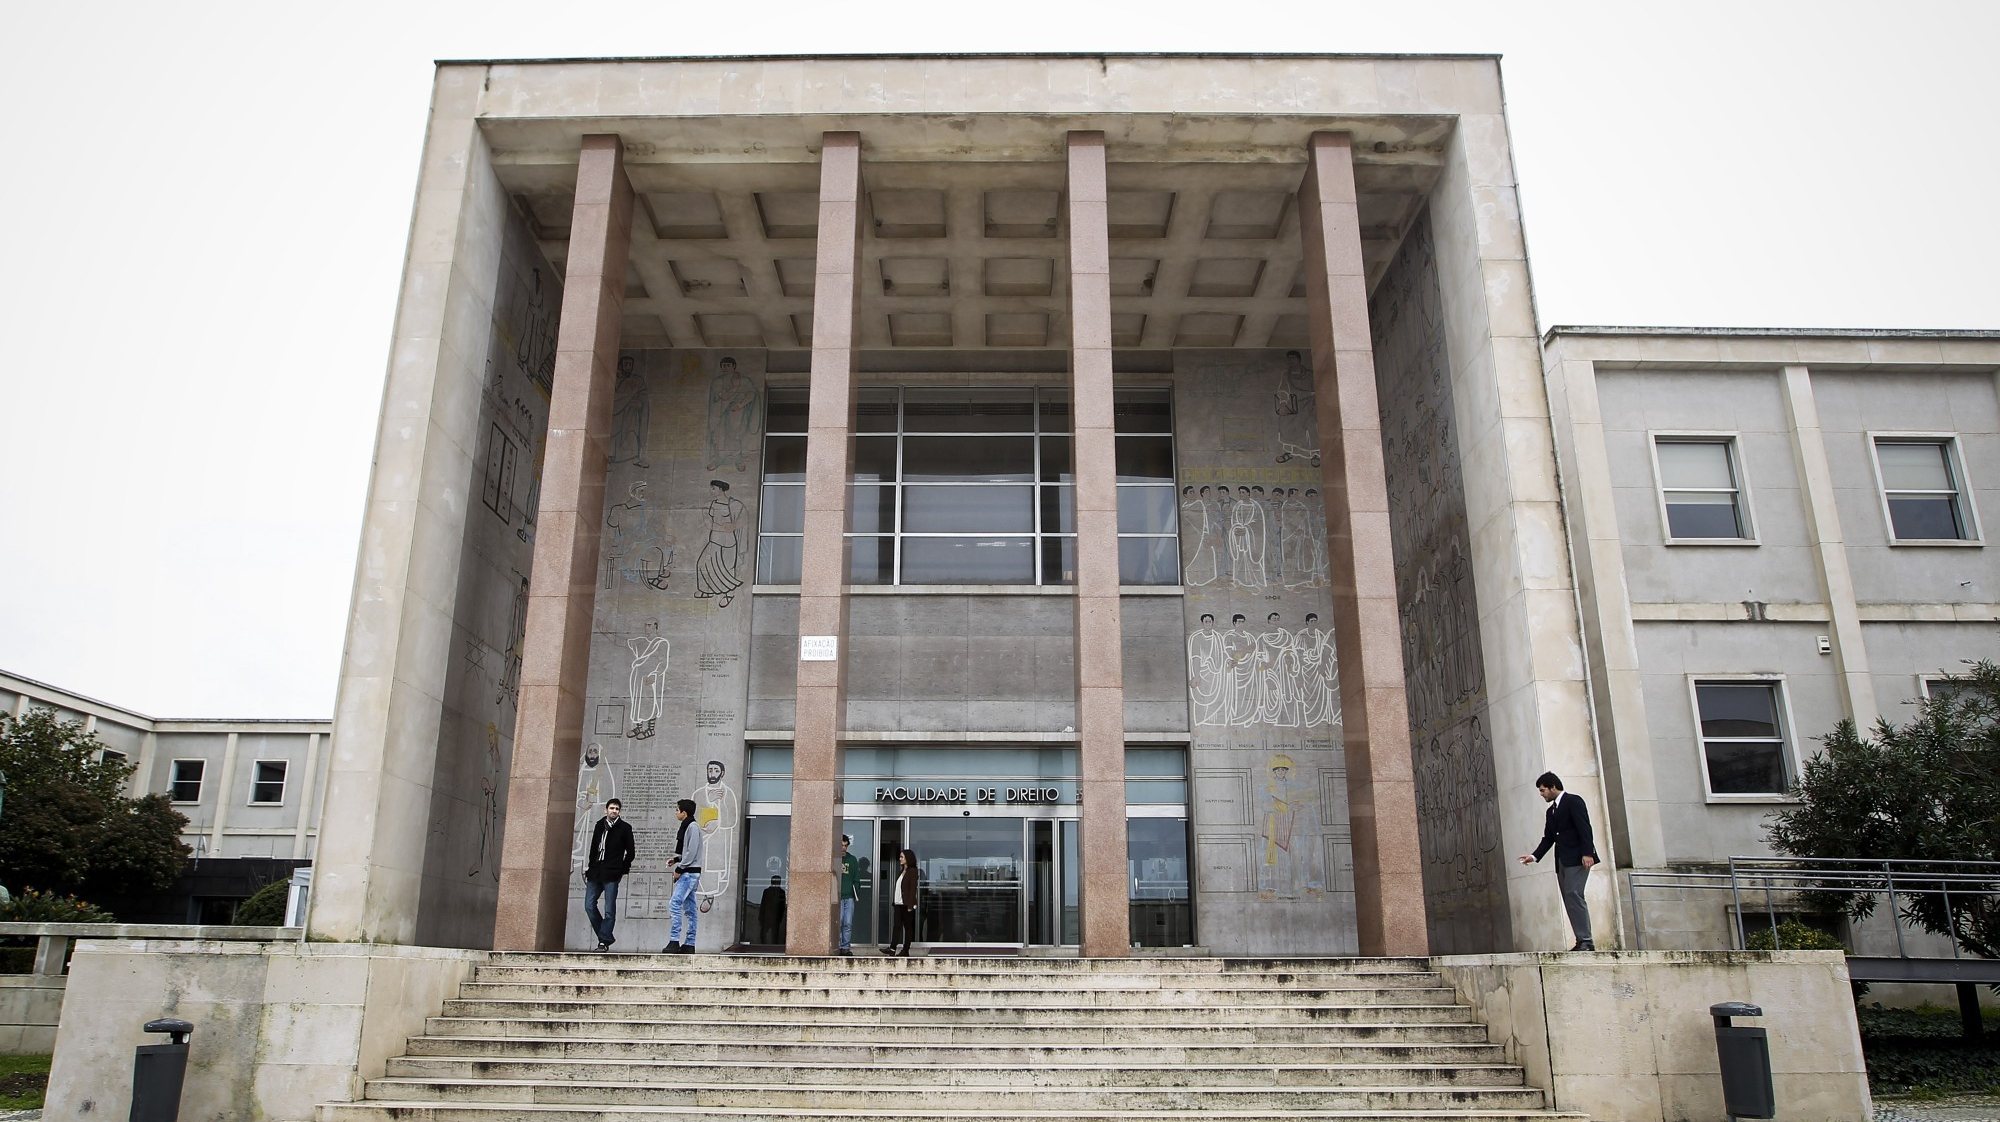 Fachada do edifício da Faculdade de Direito da Universidade de Lisboa